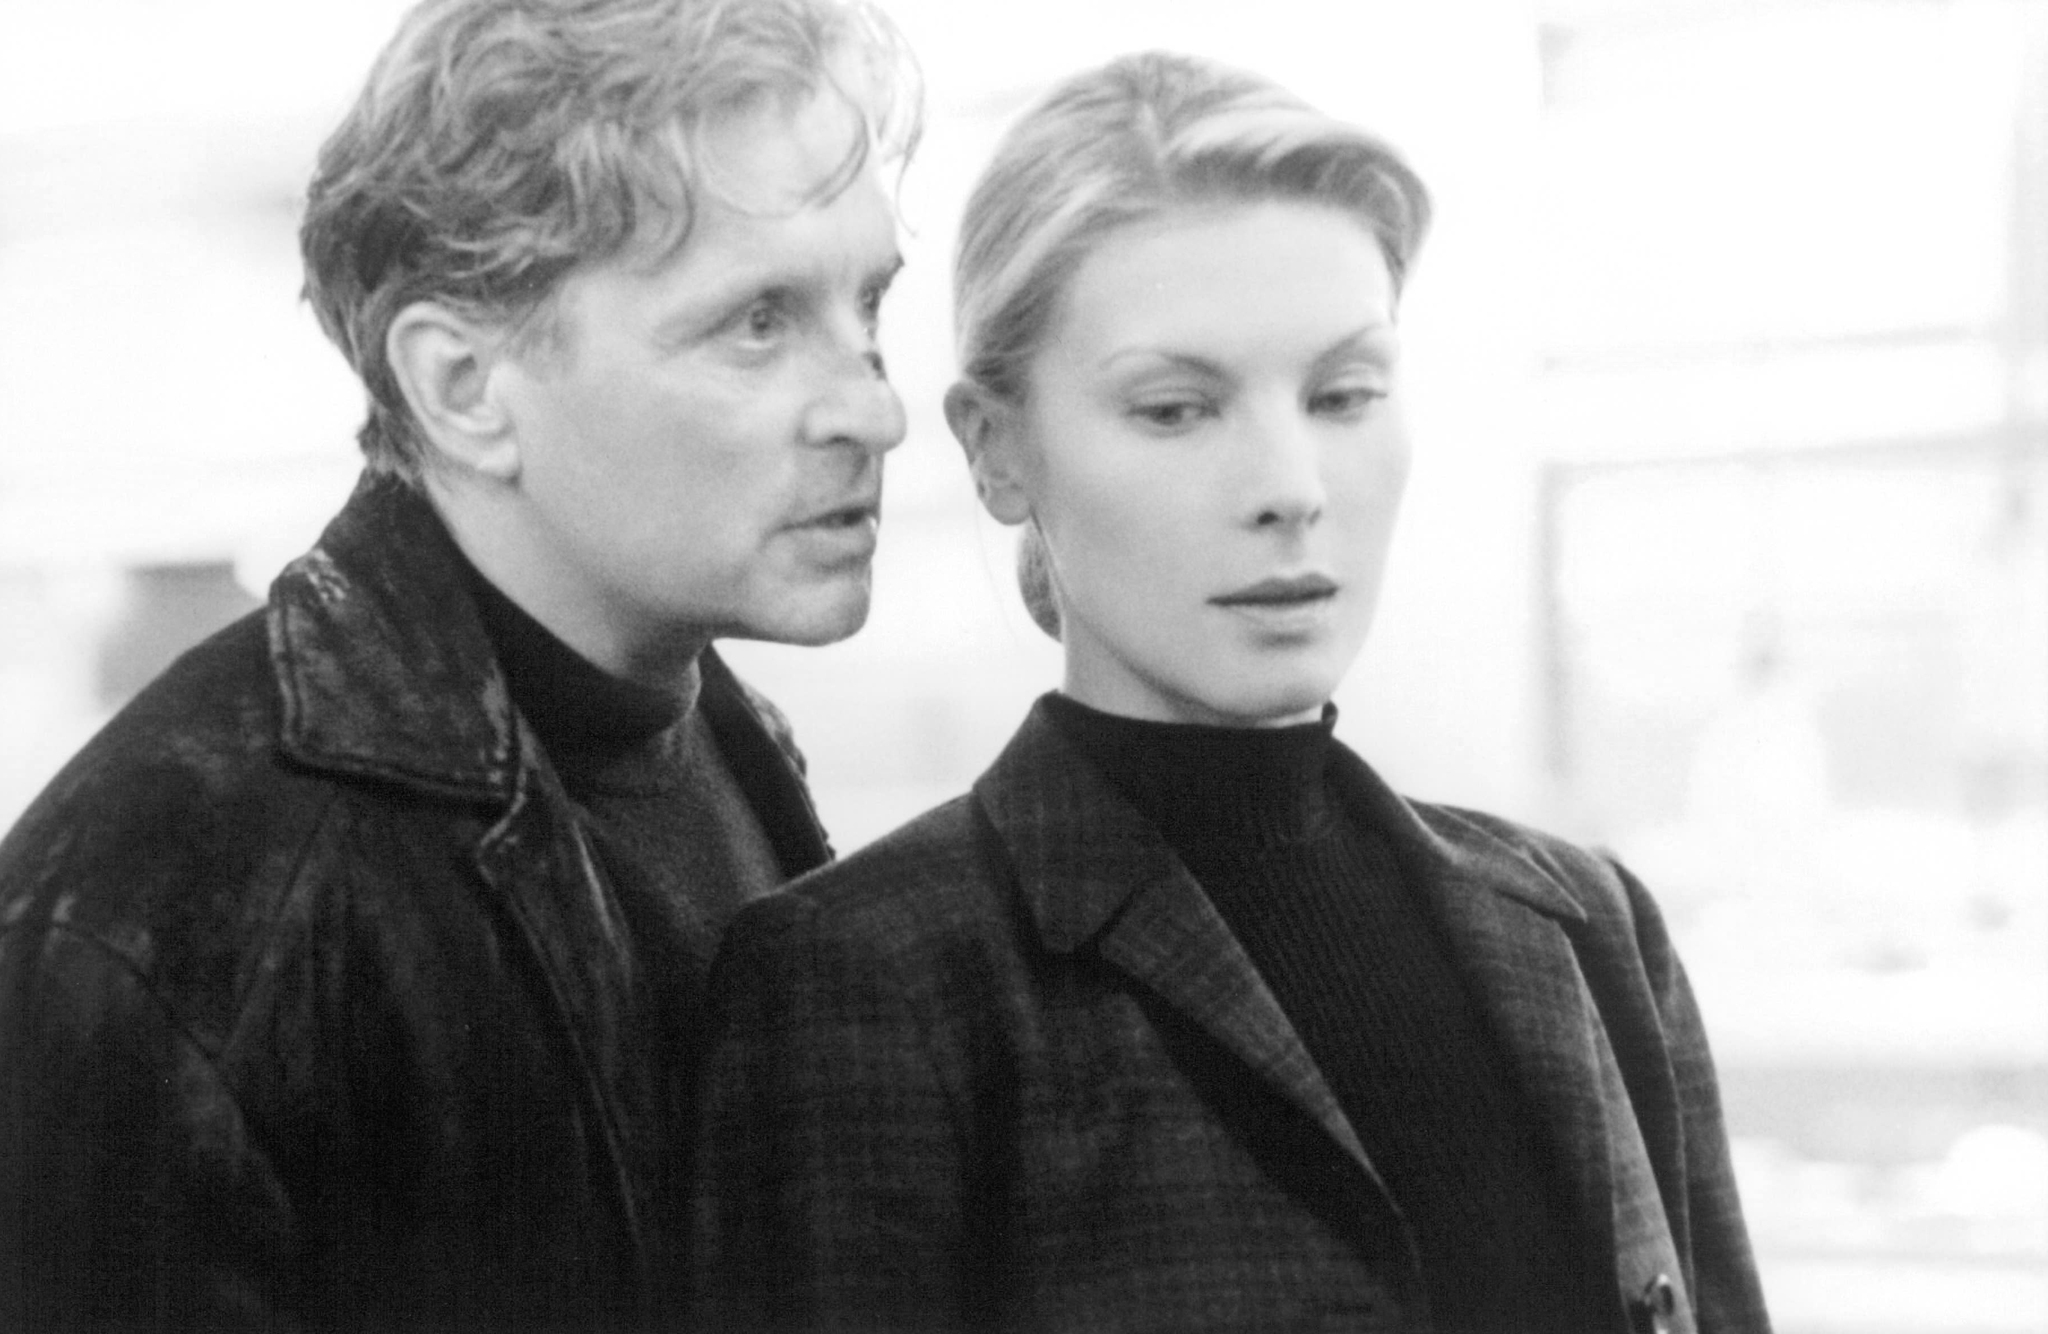 Still of Michael Douglas and Deborah Kara Unger in The Game (1997)